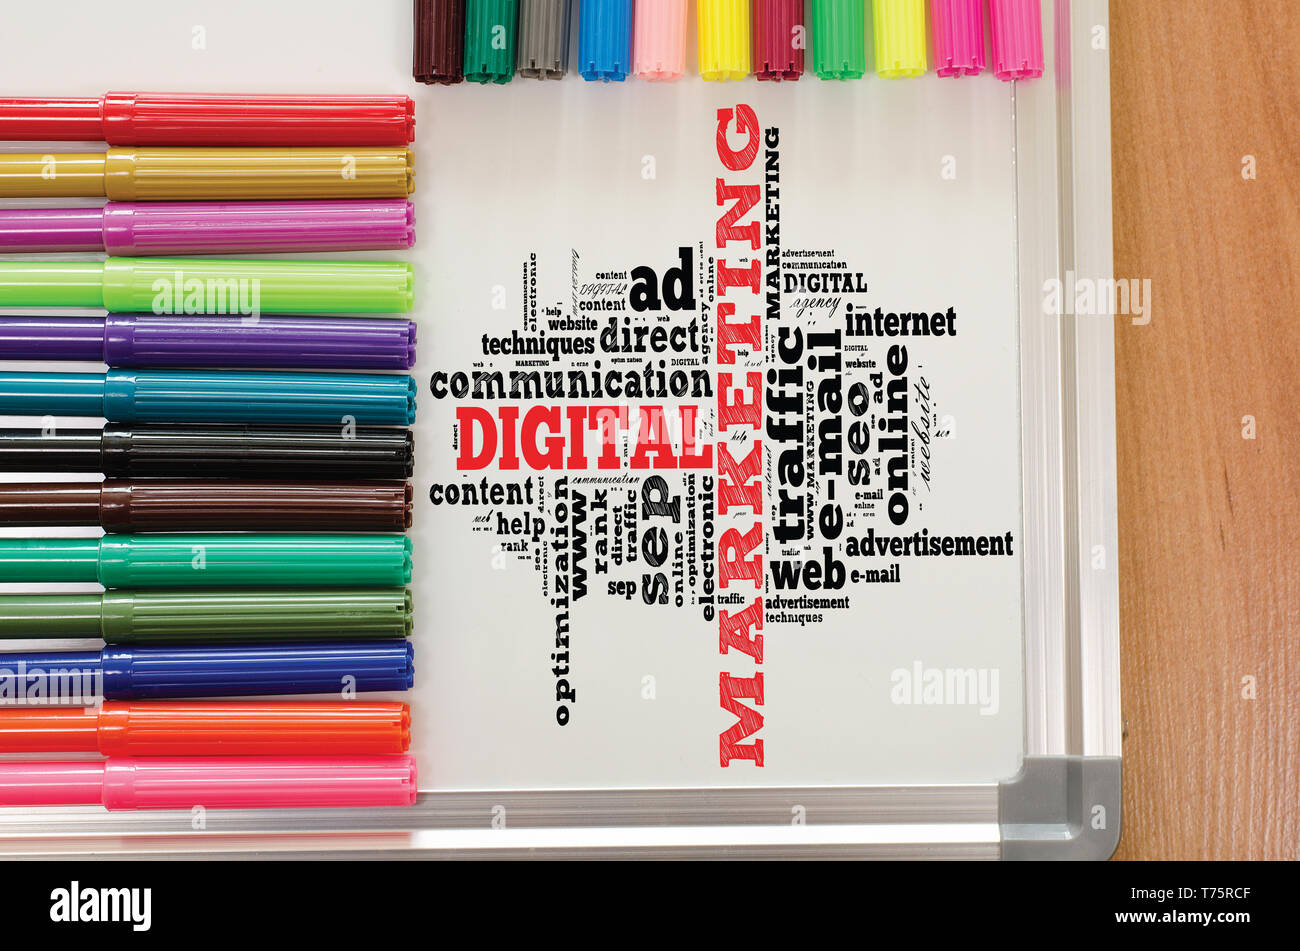 Digital marketing word cloud on the whiteboard Stock Photo